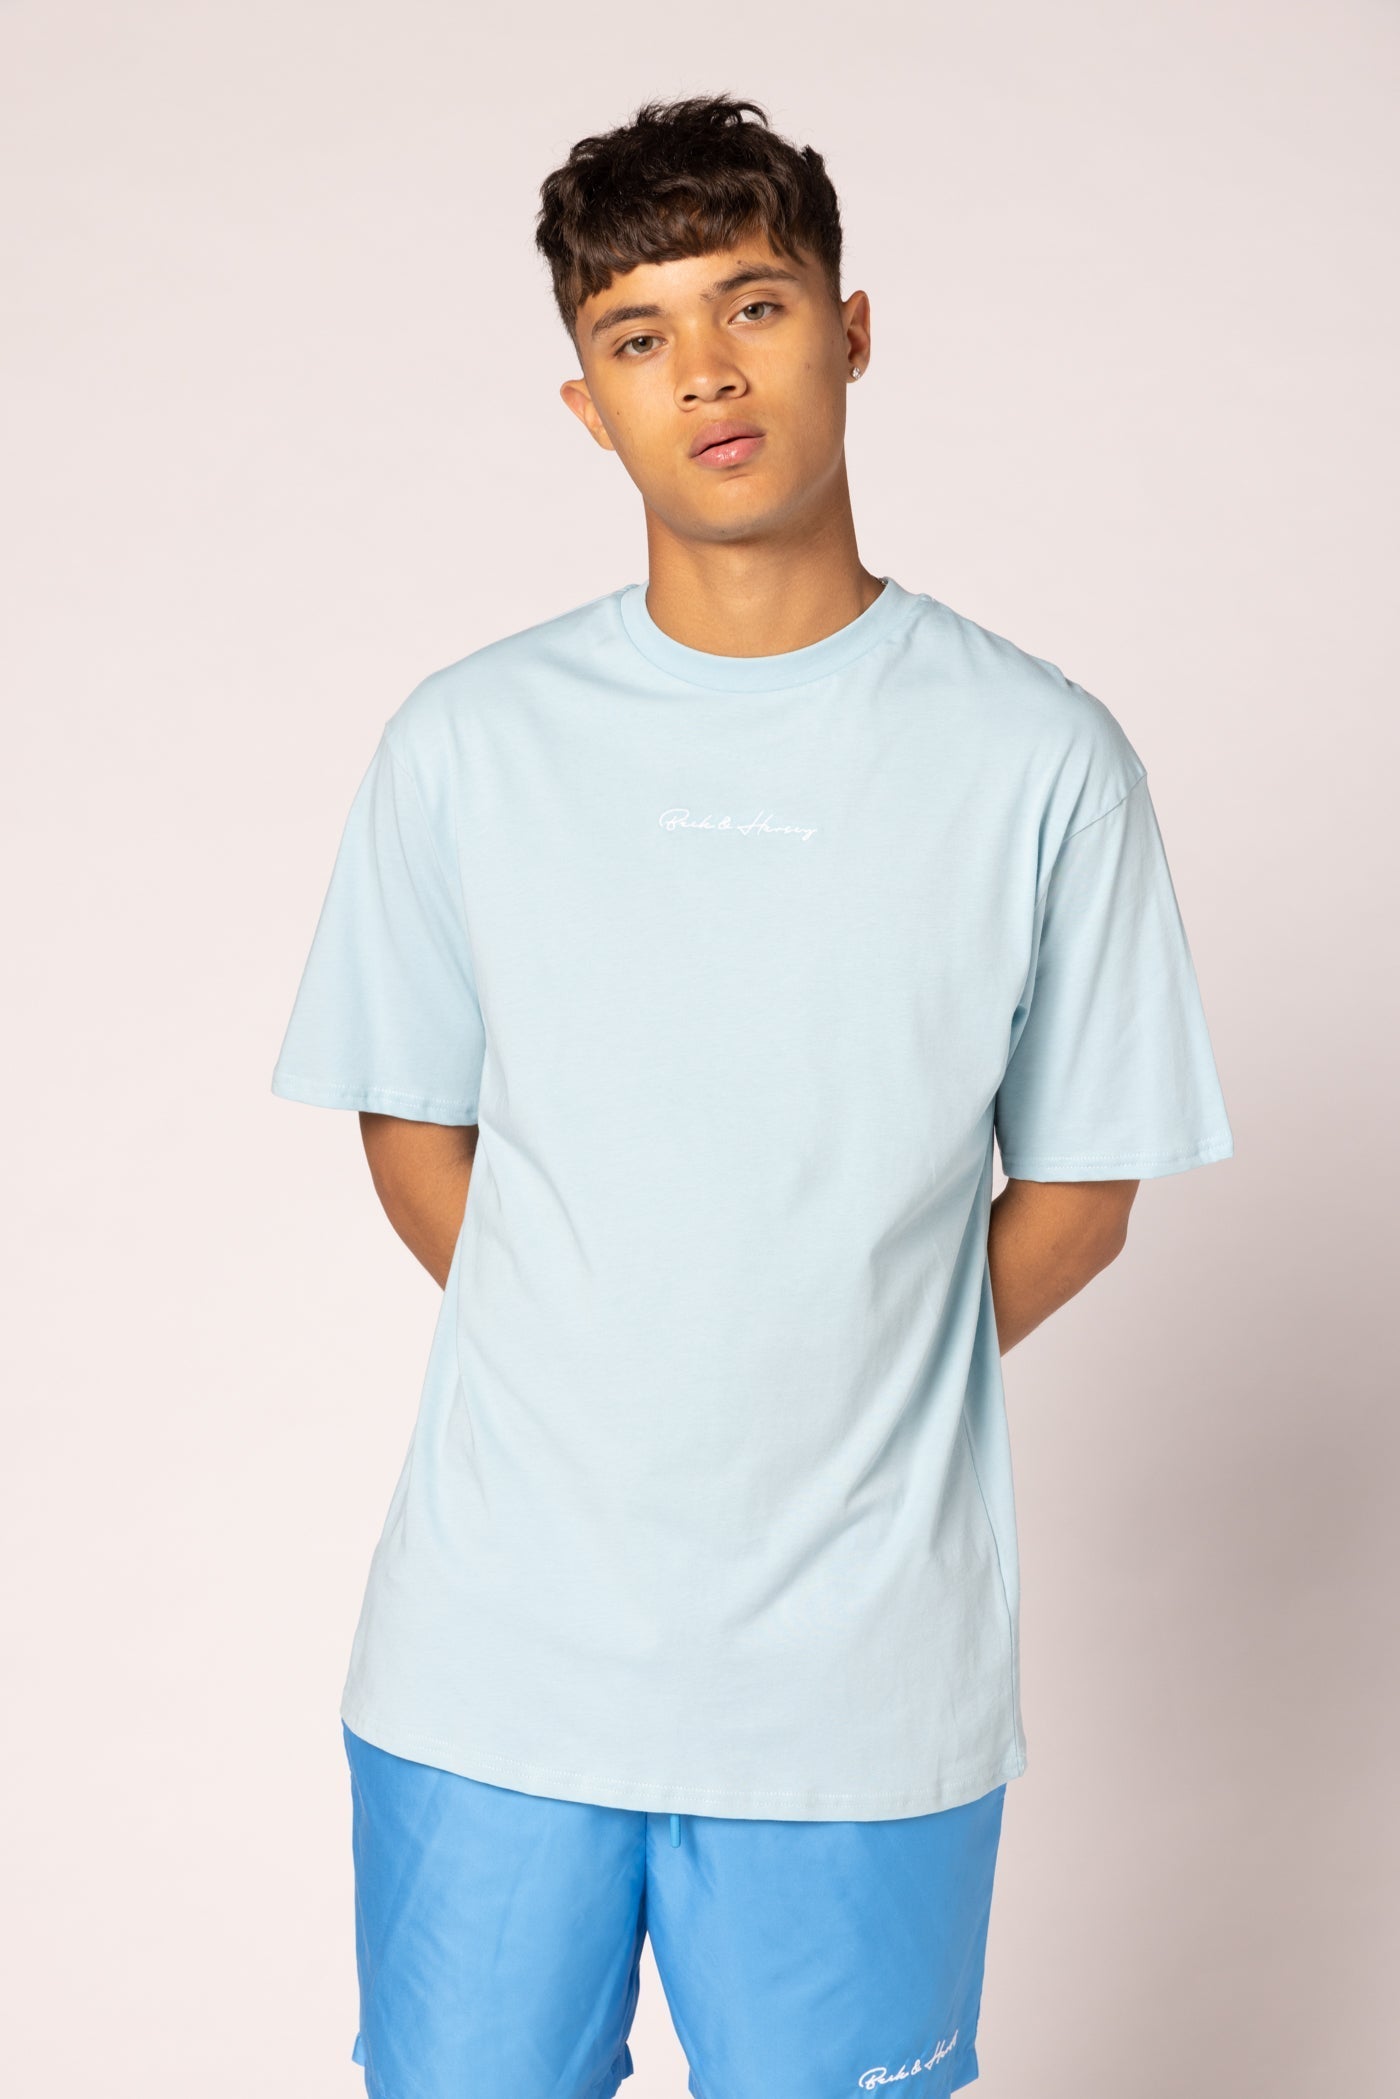 GIO T-Shirt - Aquatic Blue